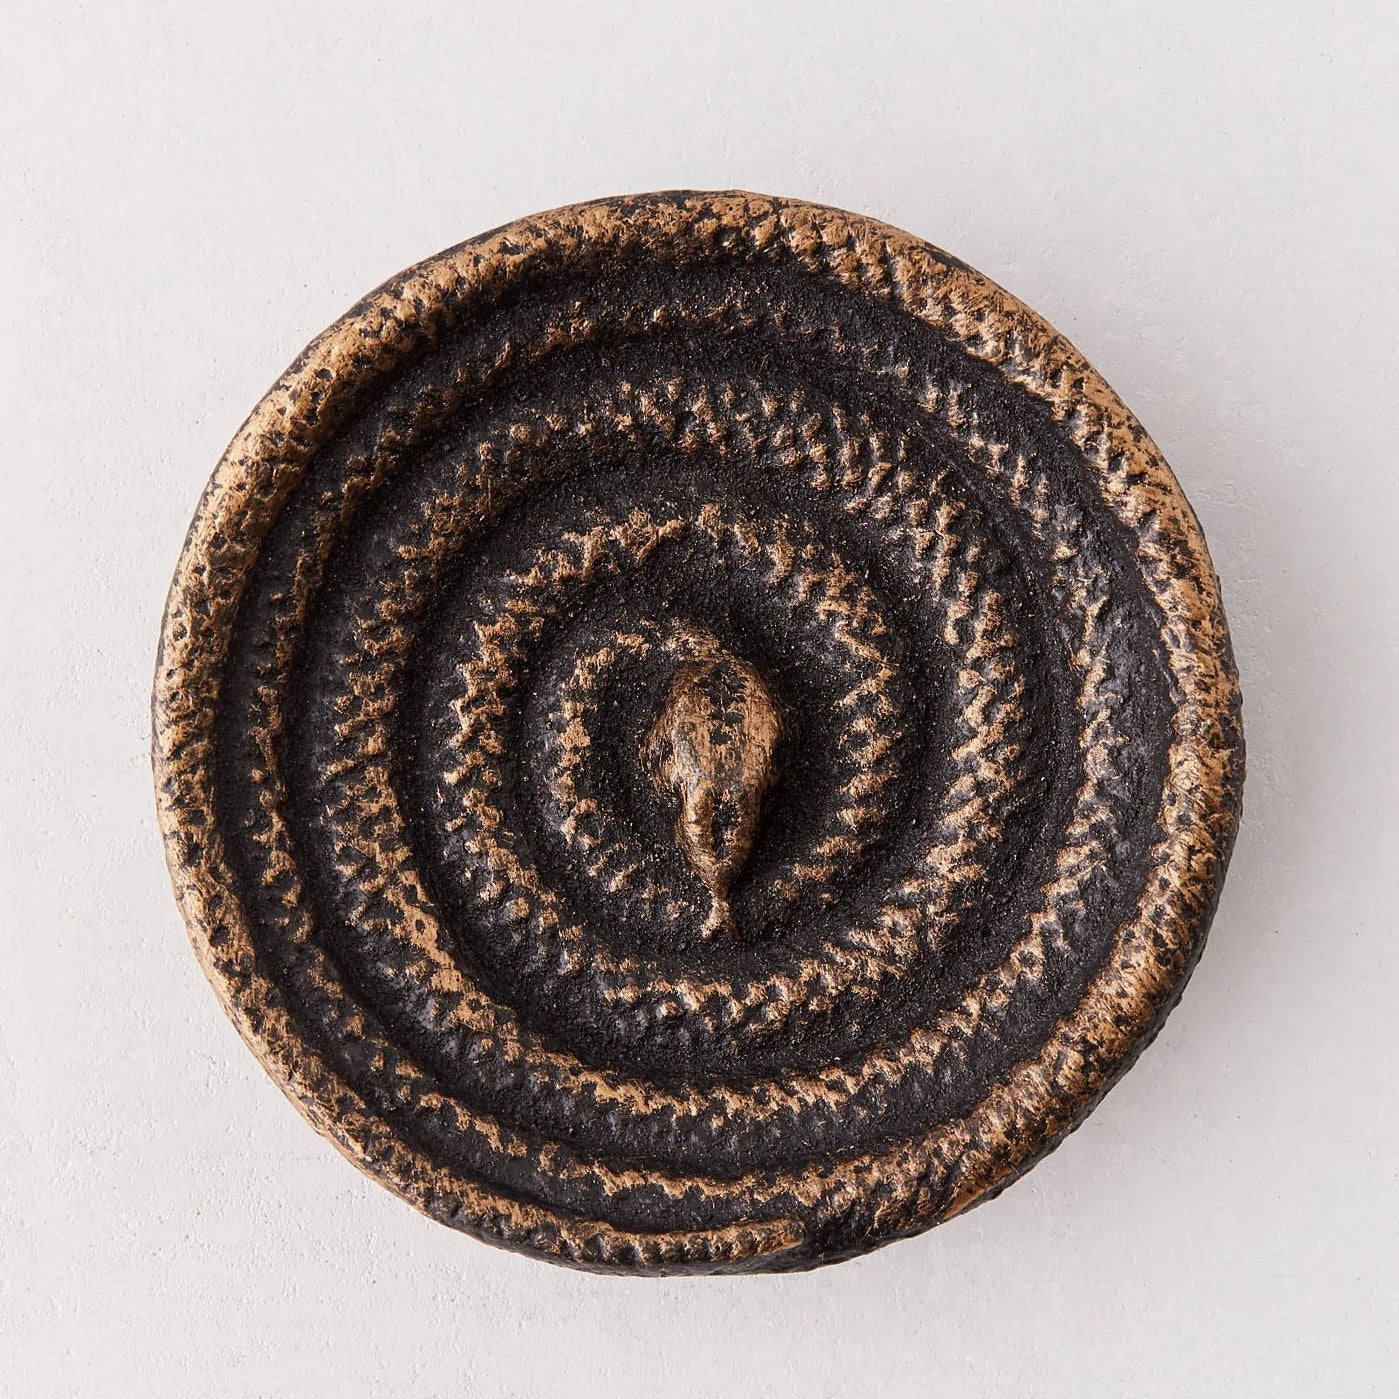 Vintage cast iron coiled serpent snake trinket dish